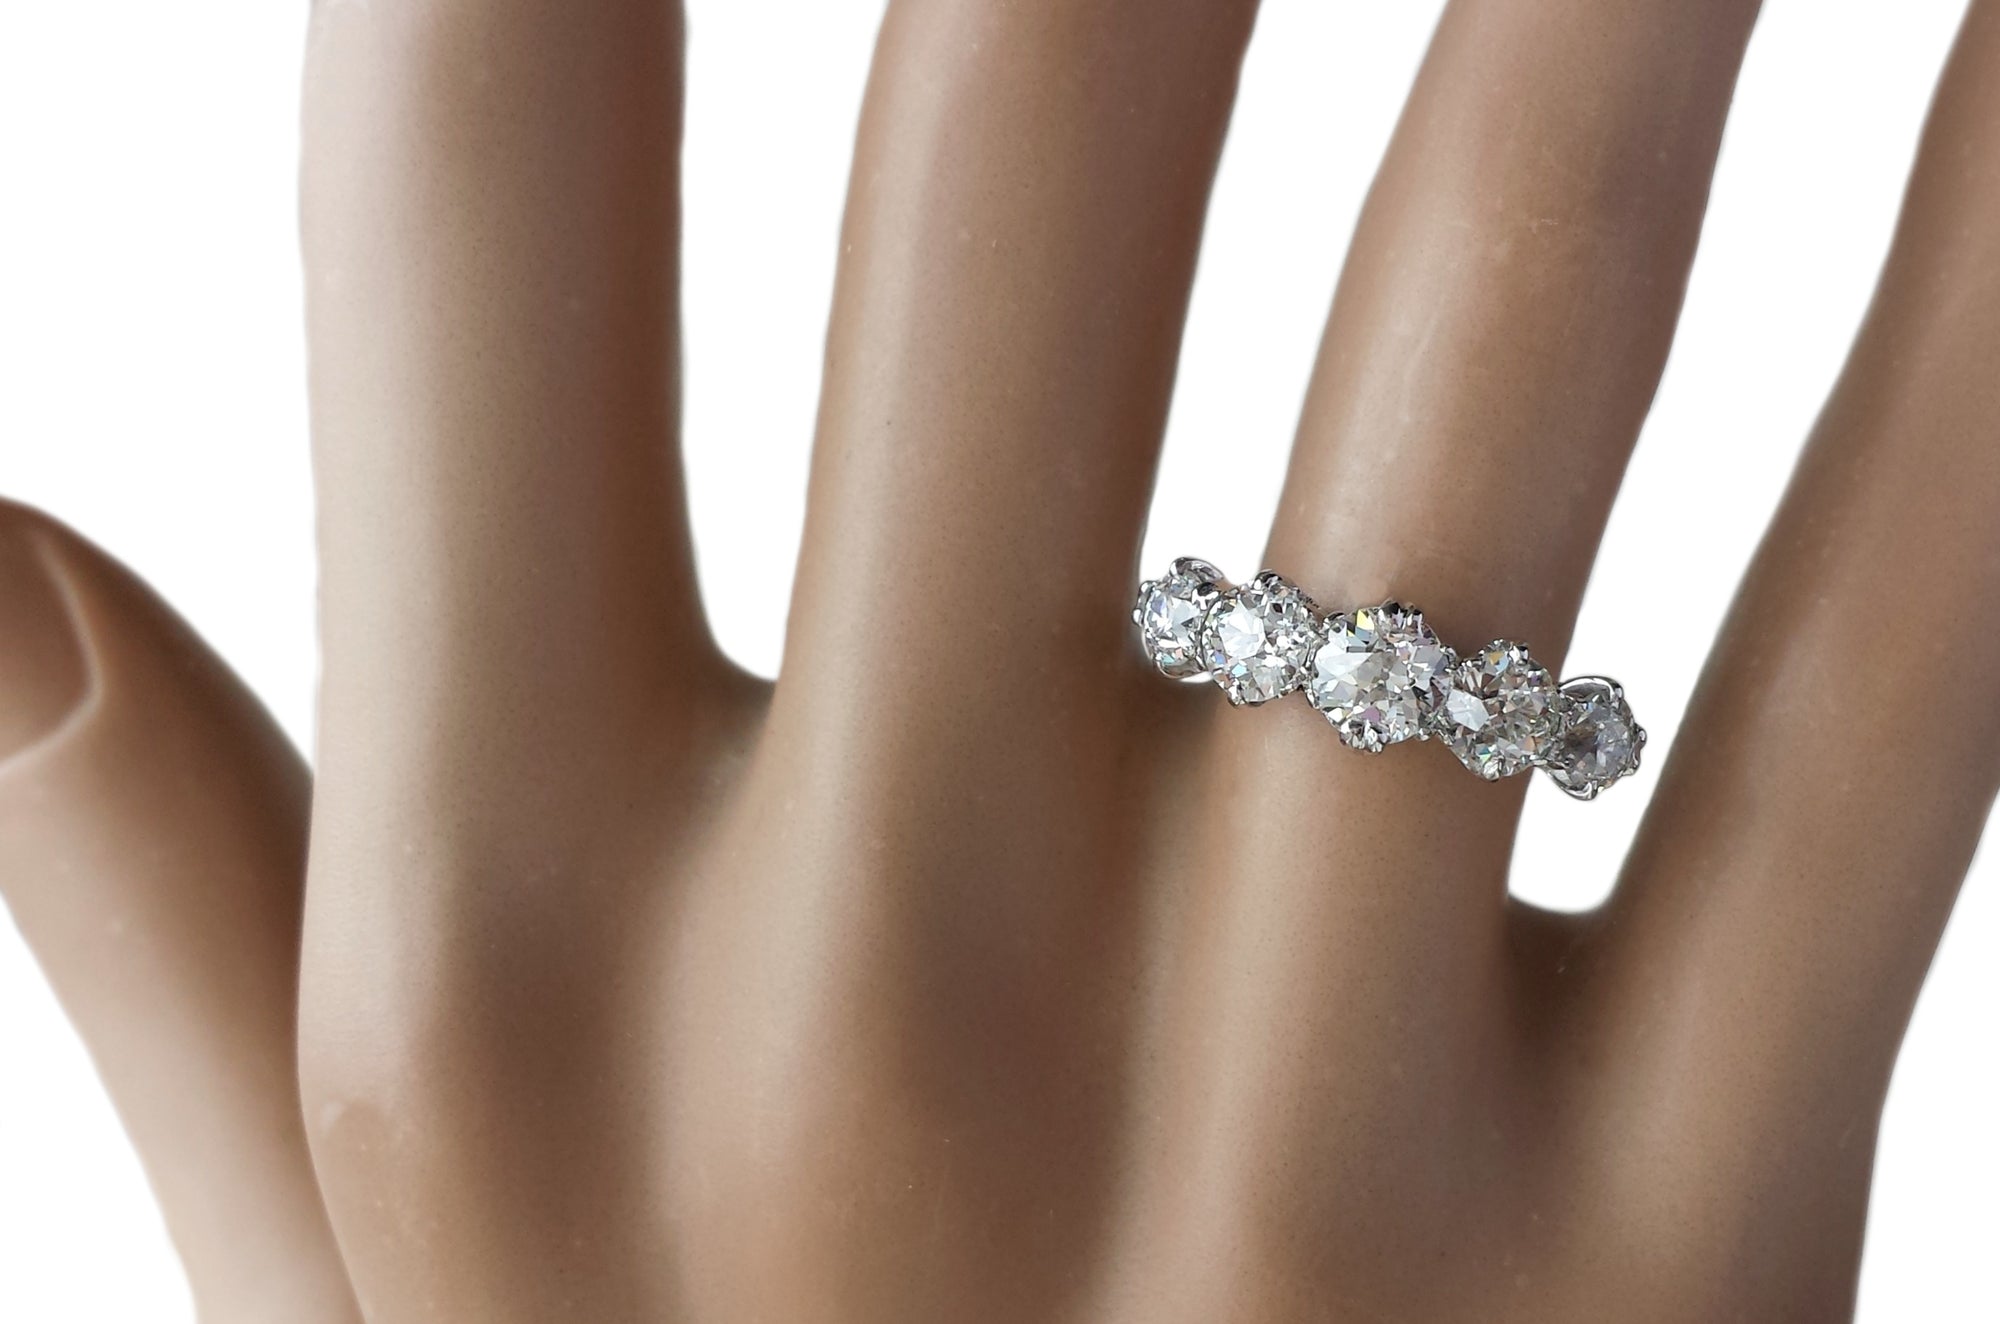 Vintage 1.65ct 5-Stone Old European Cut Diamond Engagement Ring in Platinum